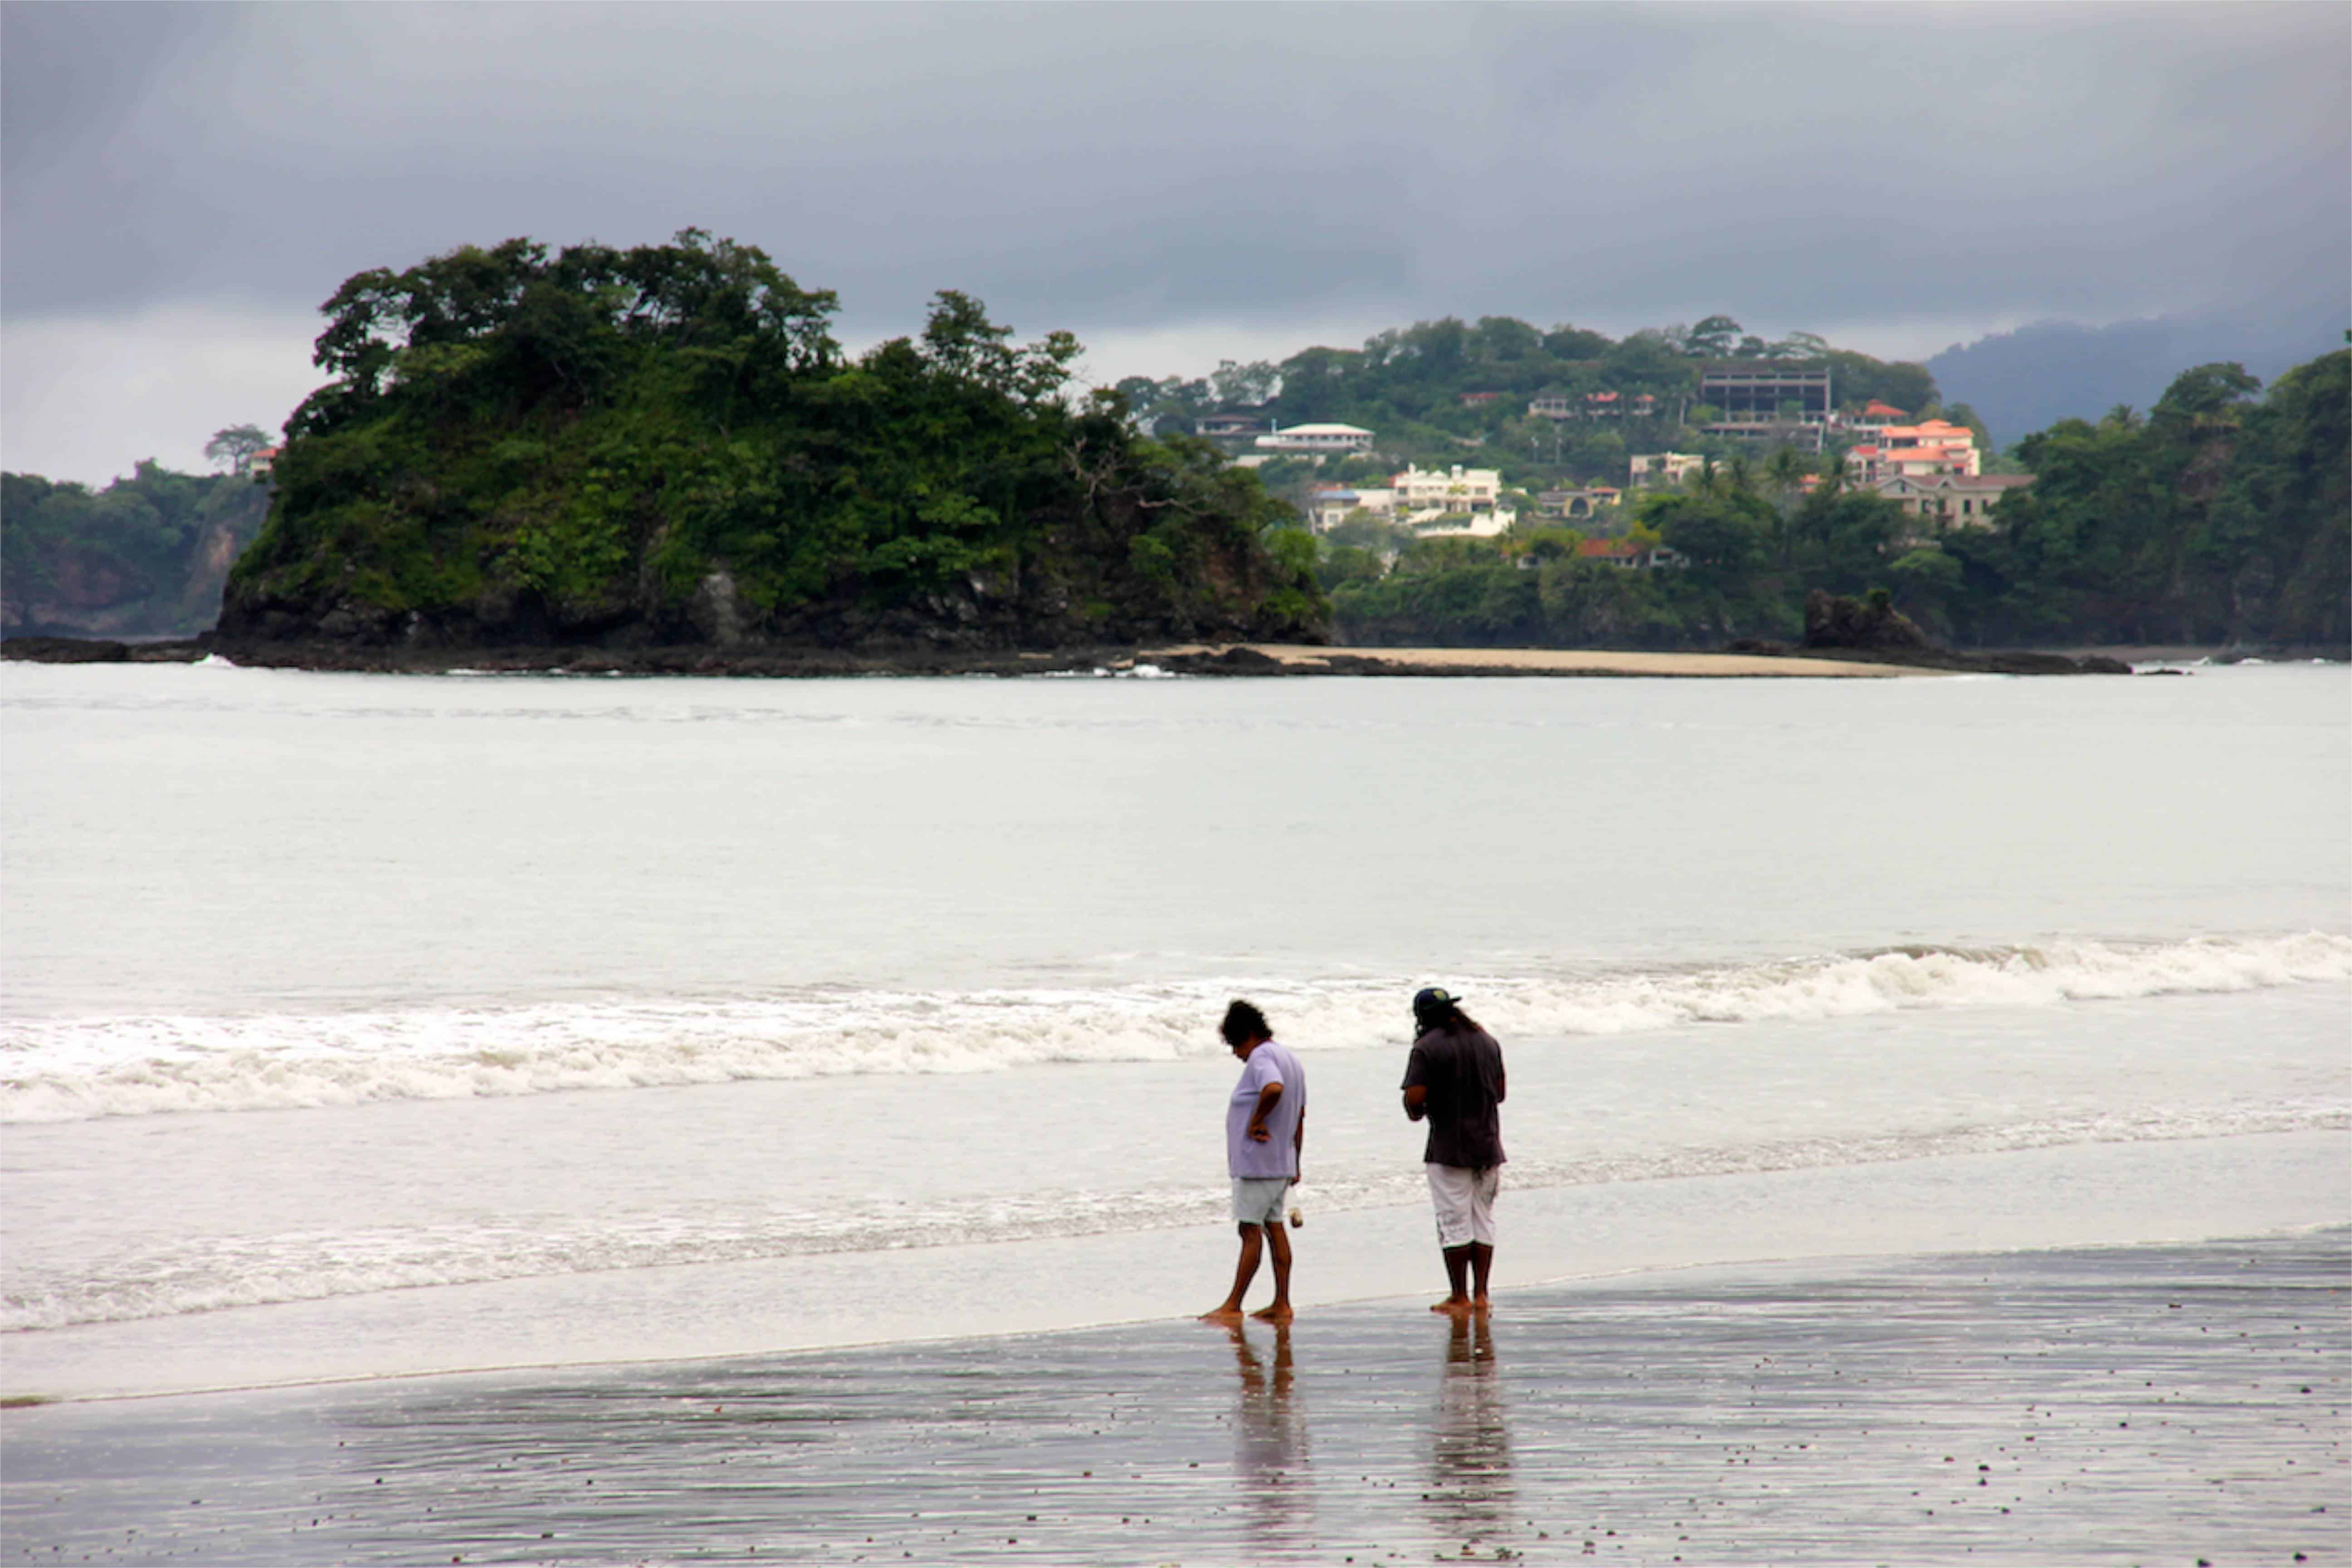 Beachgoers stroll the sands of Brasilito’s bay.